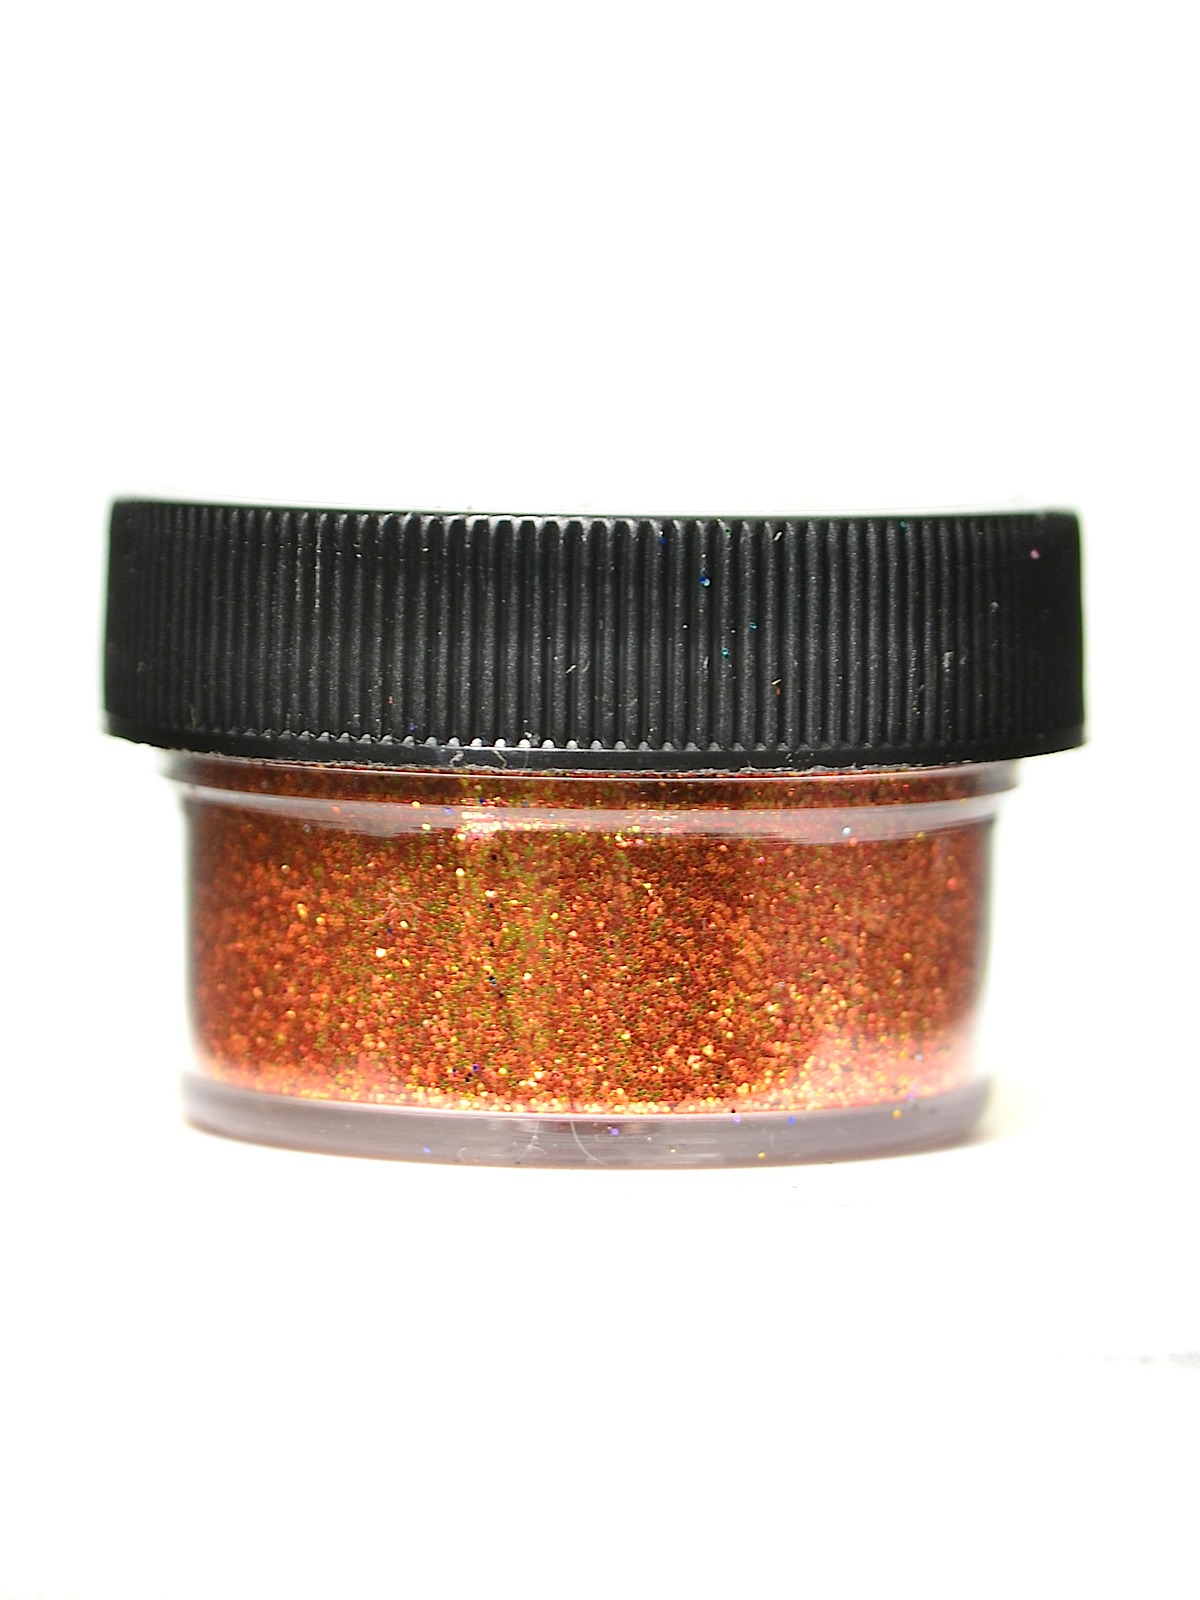 Ultrafine Opaque Glitter Copper Canyon 1 2 Oz. Jar